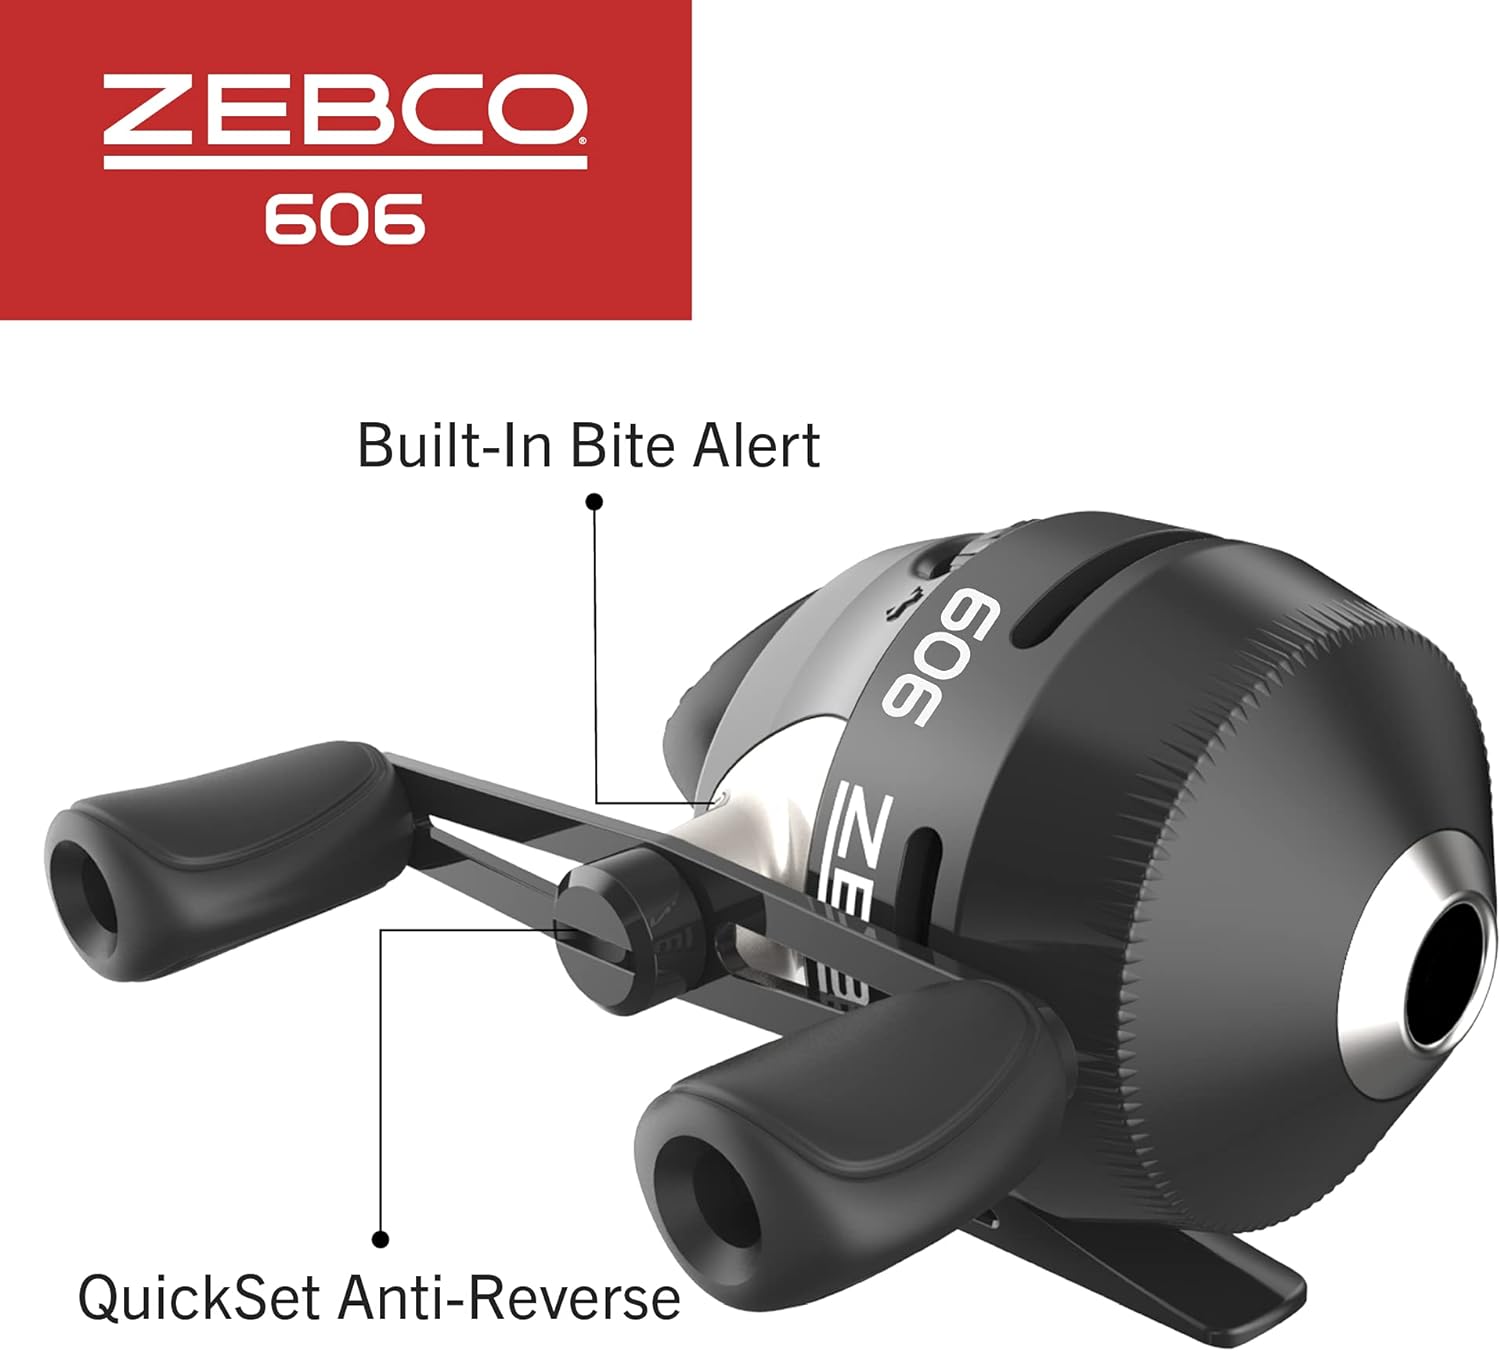 Zebco 606 Spincast Fishing Reel Review